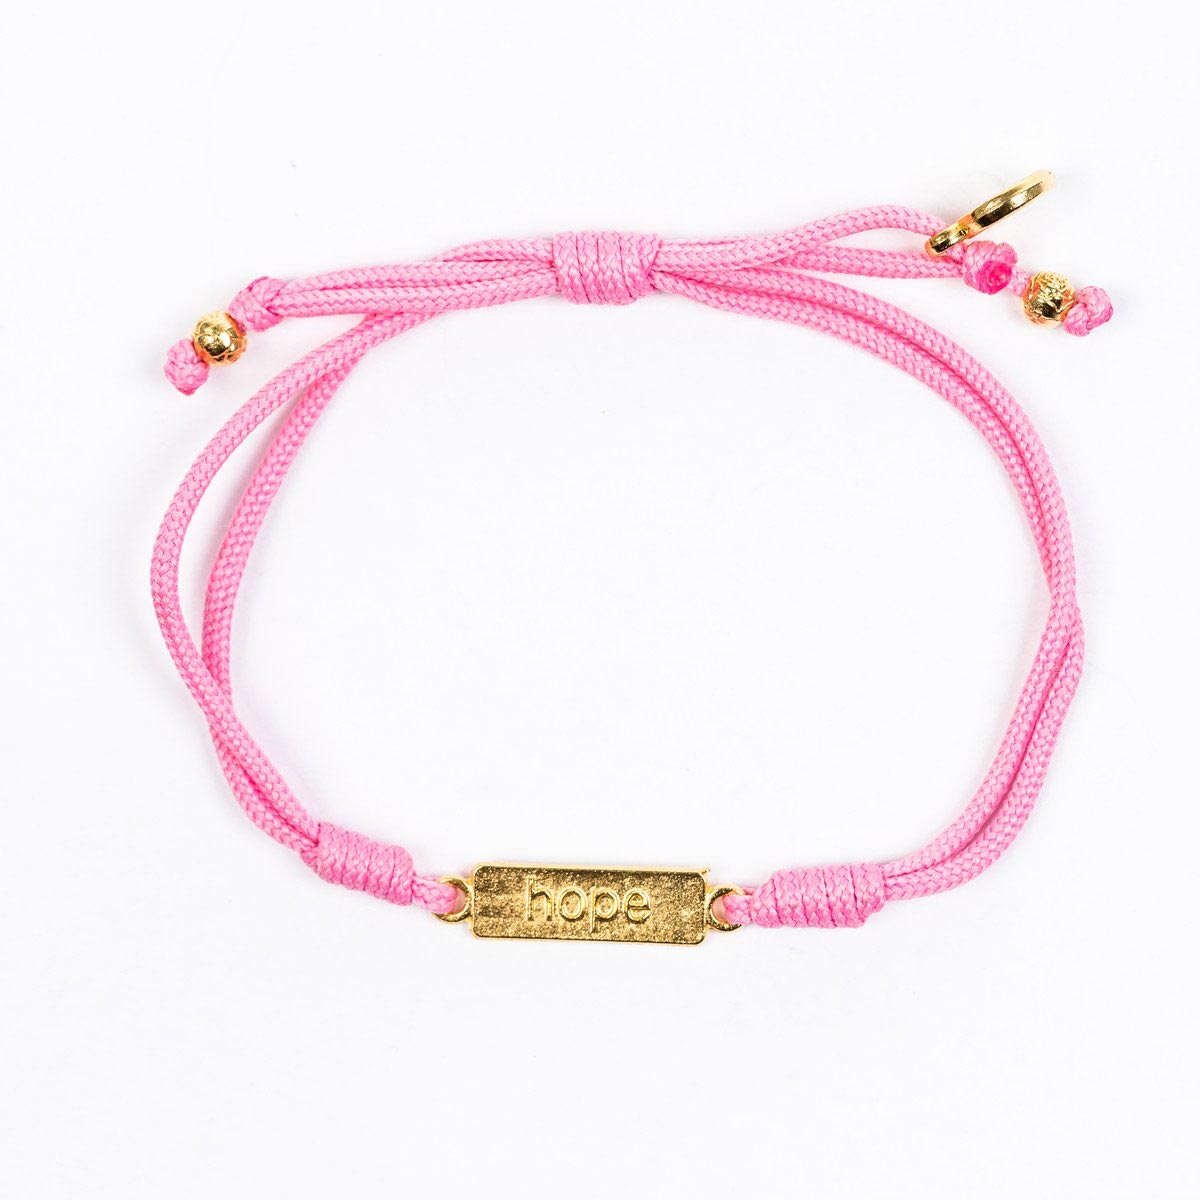 Words of Wisdom - Pink HOPE Bracelet